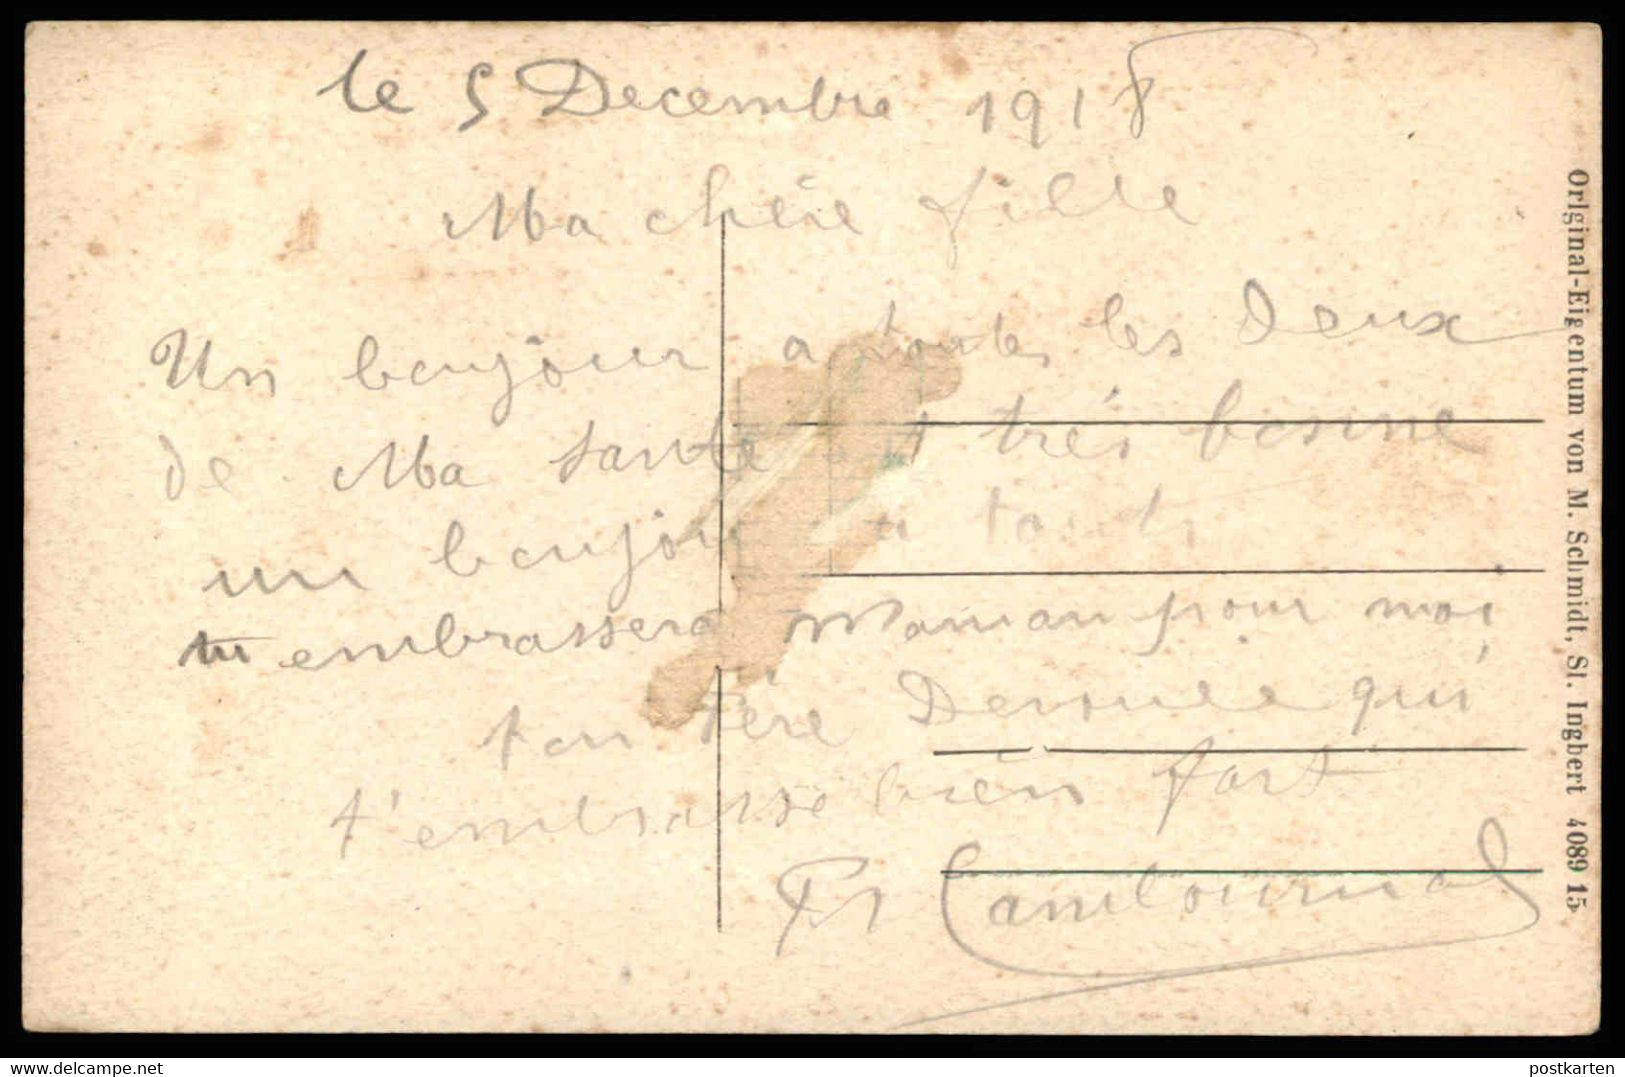 ALTE POSTKARTE ST. INGBERT TOTAL 1918 GESAMTANSICHT PANORAMA TOTALANSICHT SAAR SAARGEBIET Cpa Postcard AK Ansichtskarte - Saarpfalz-Kreis